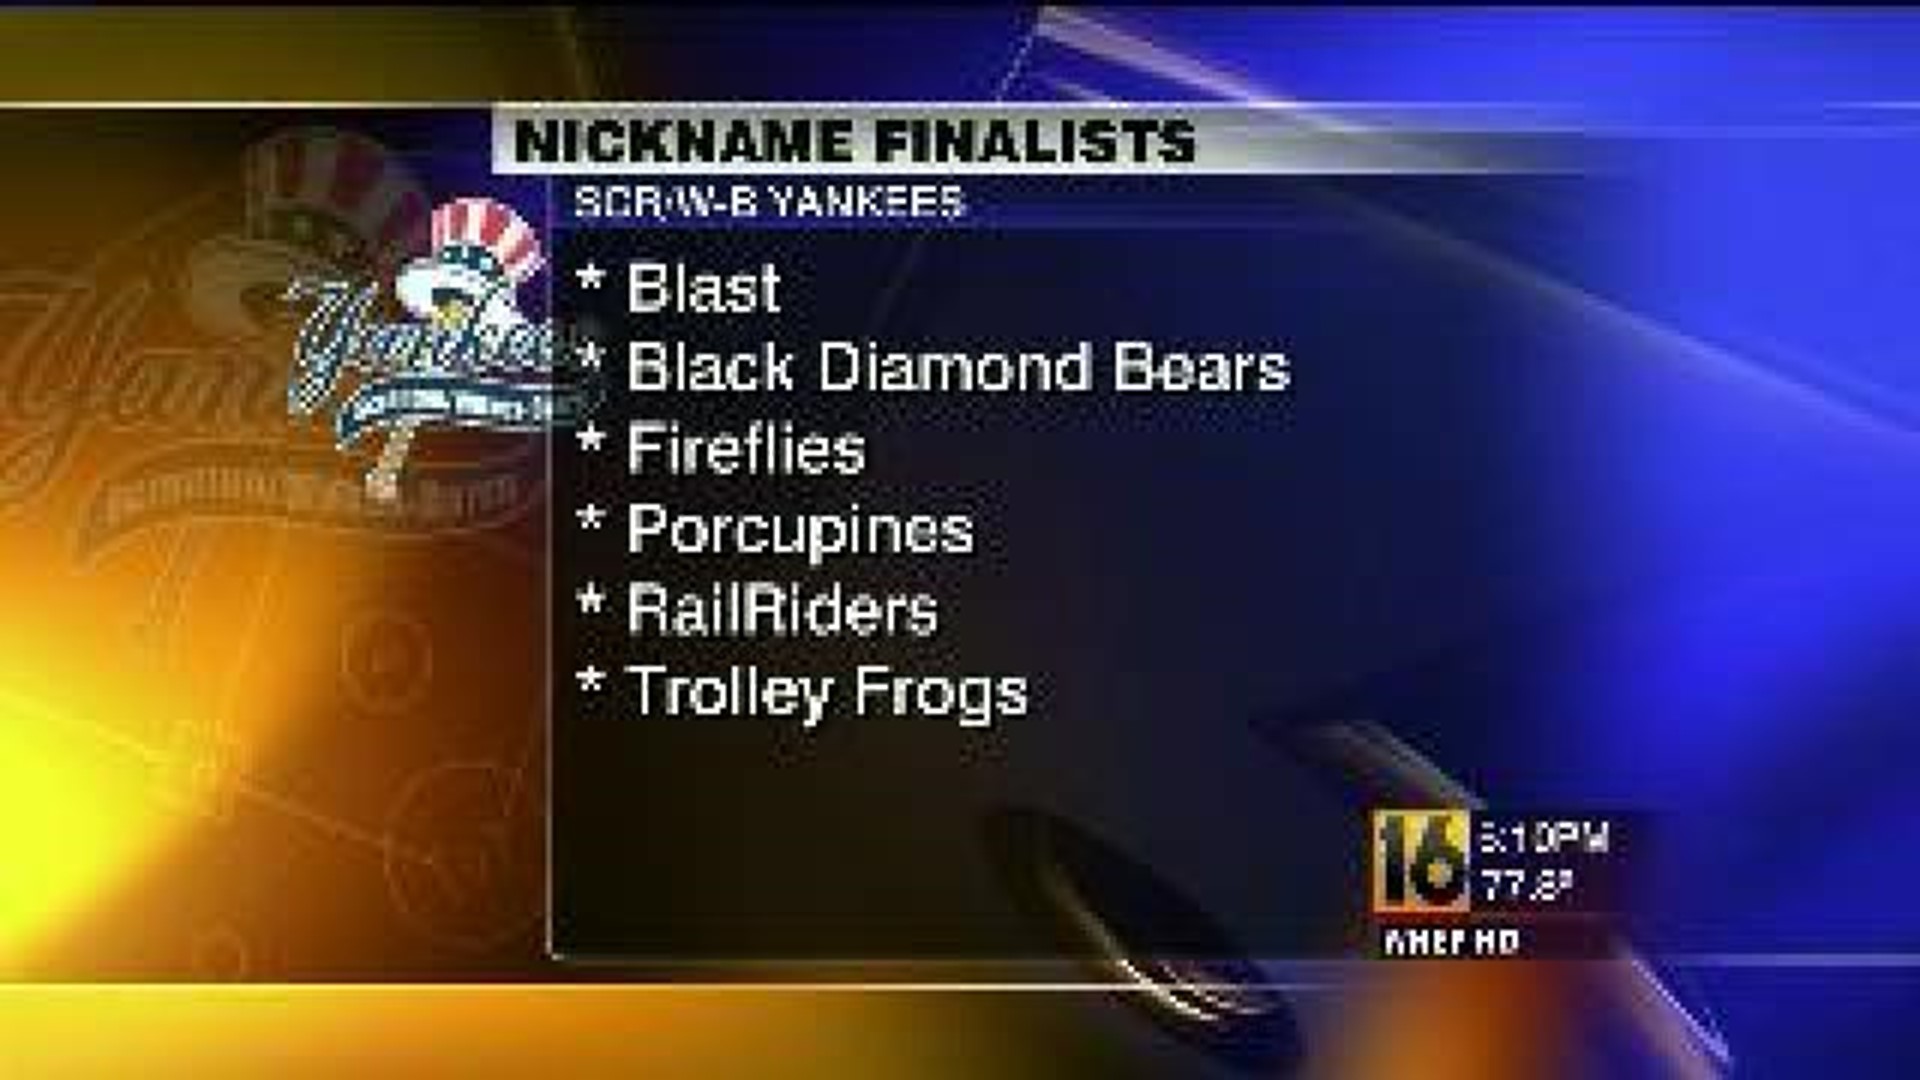 SWB Yankees Release “Nickname” Finalists